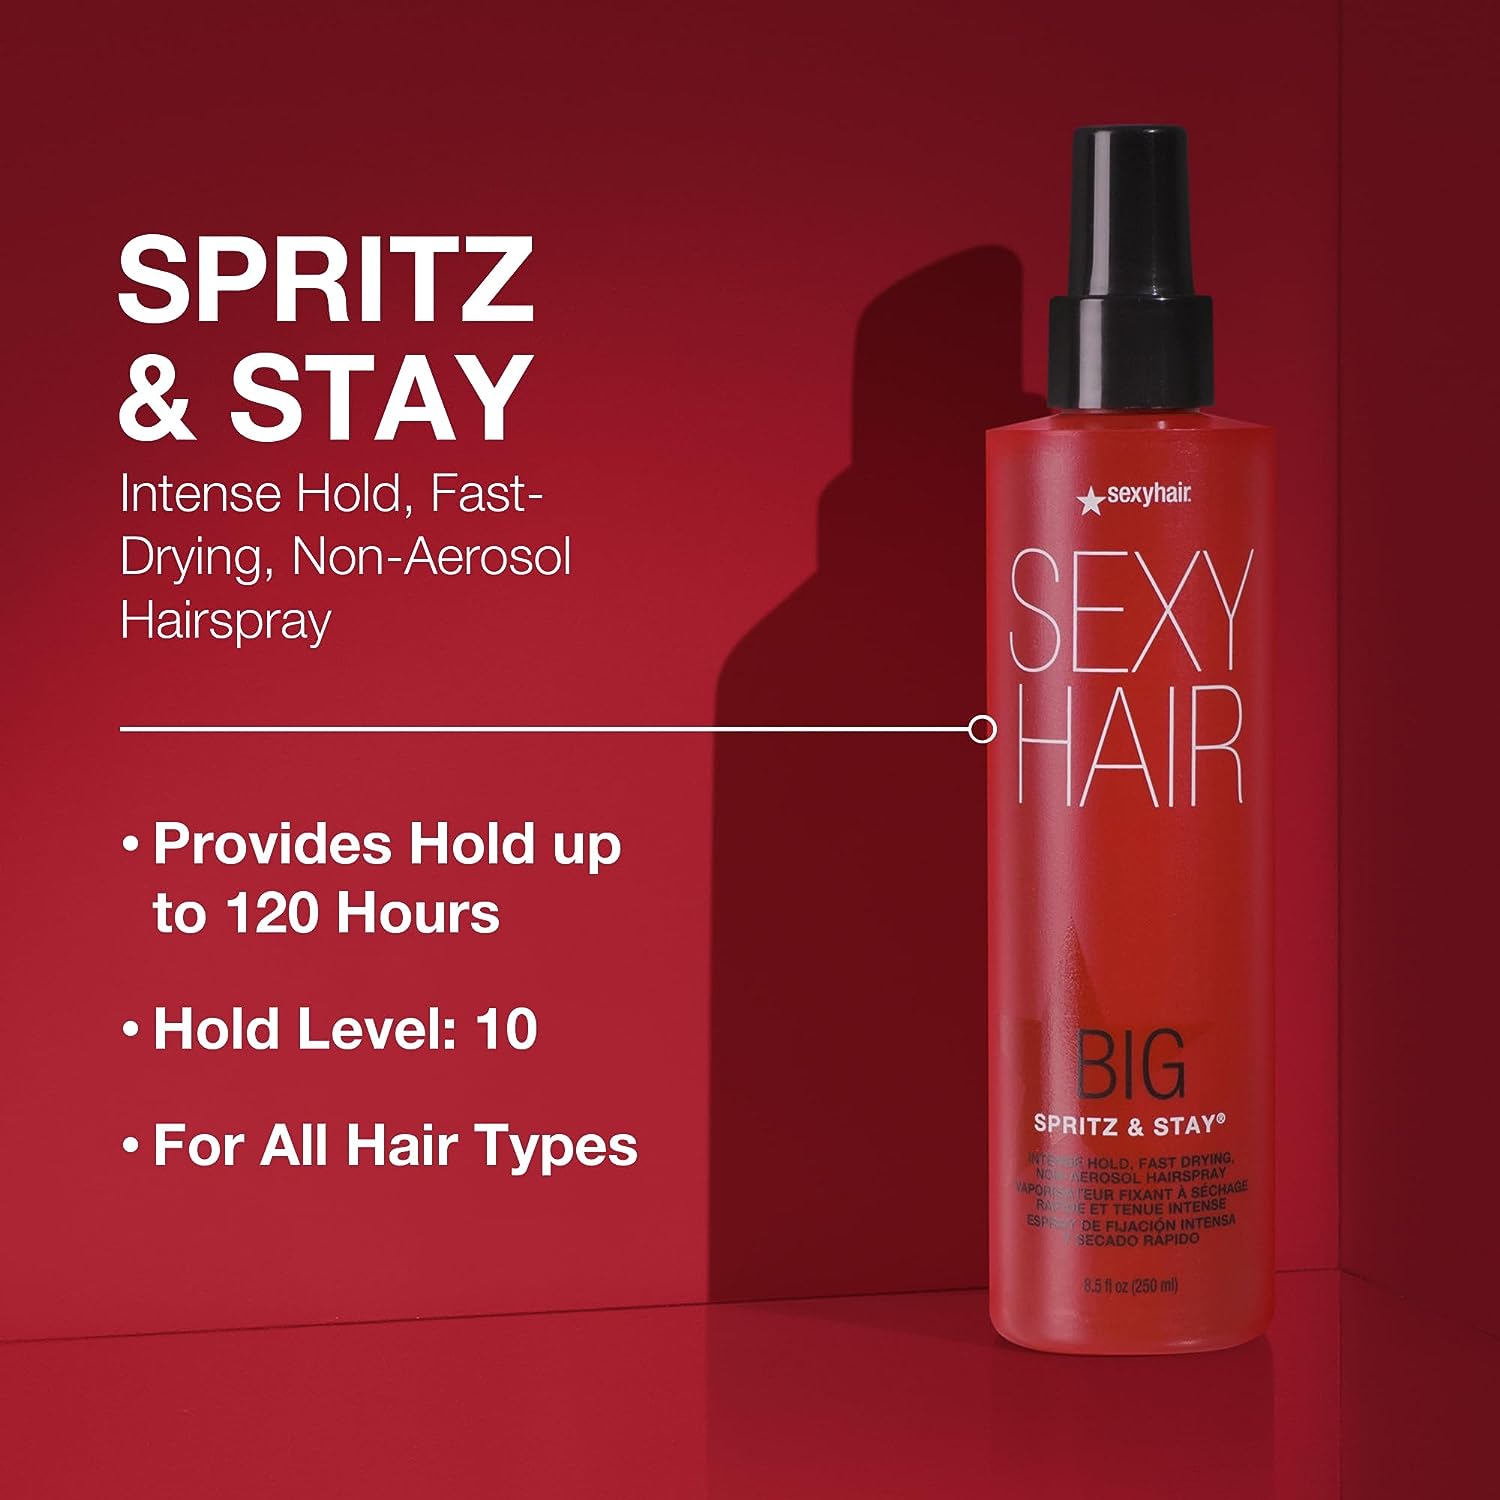 Big Sexy Hair Spritz & Stay Intense Hold Fast Dry Non-Aerosol Hairspray Benefits